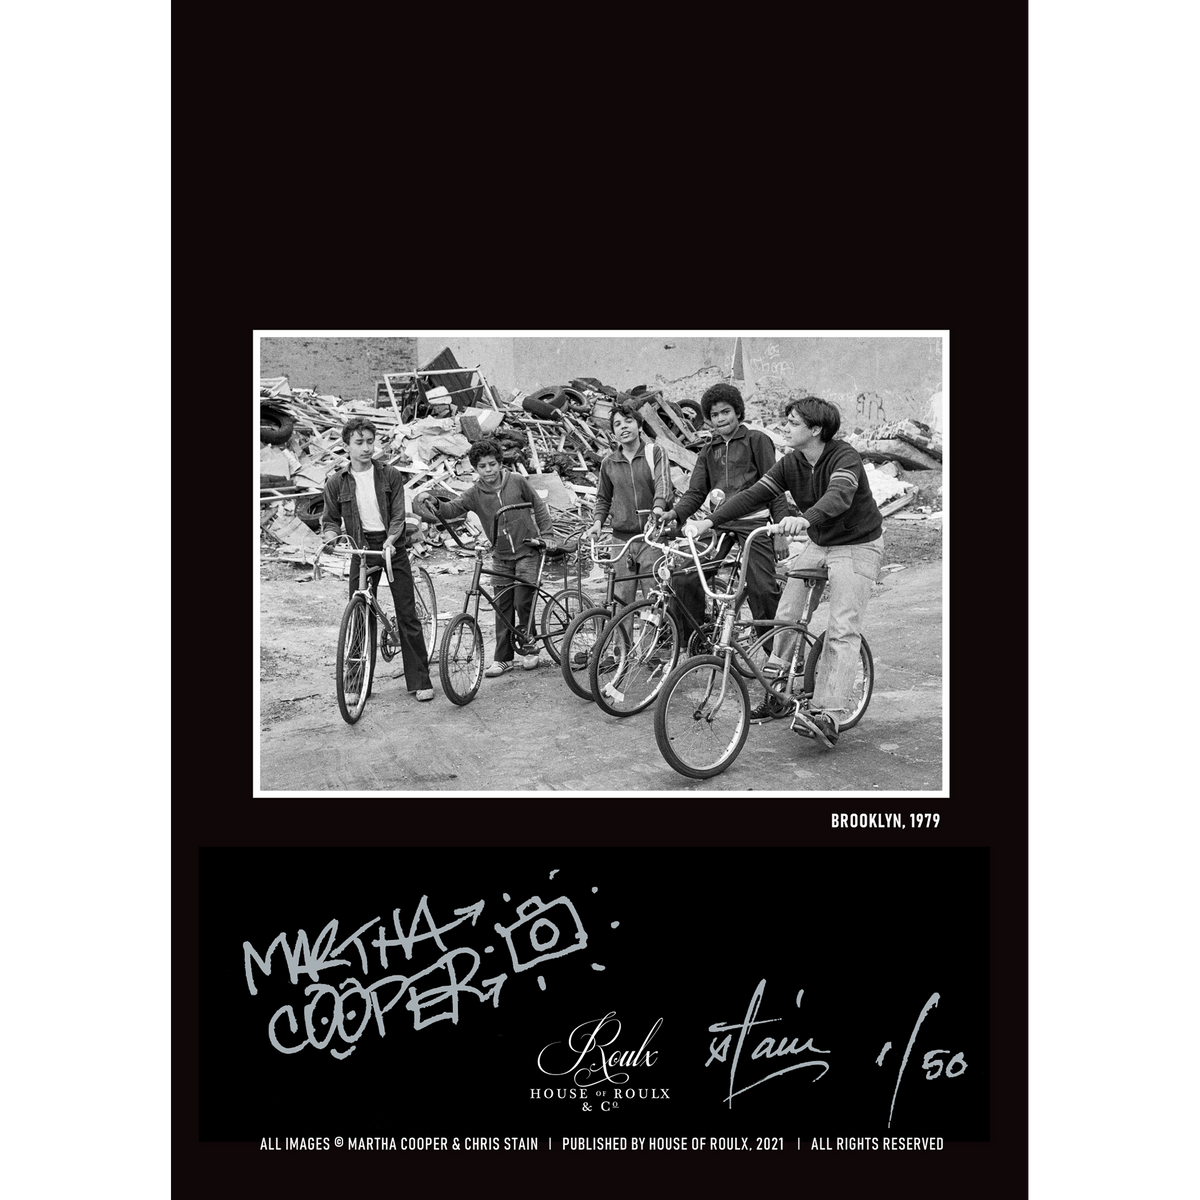 Martha Cooper &amp; Chris Stain &quot;The Bicycle Boys&quot; - Print &amp; Zine Bundle